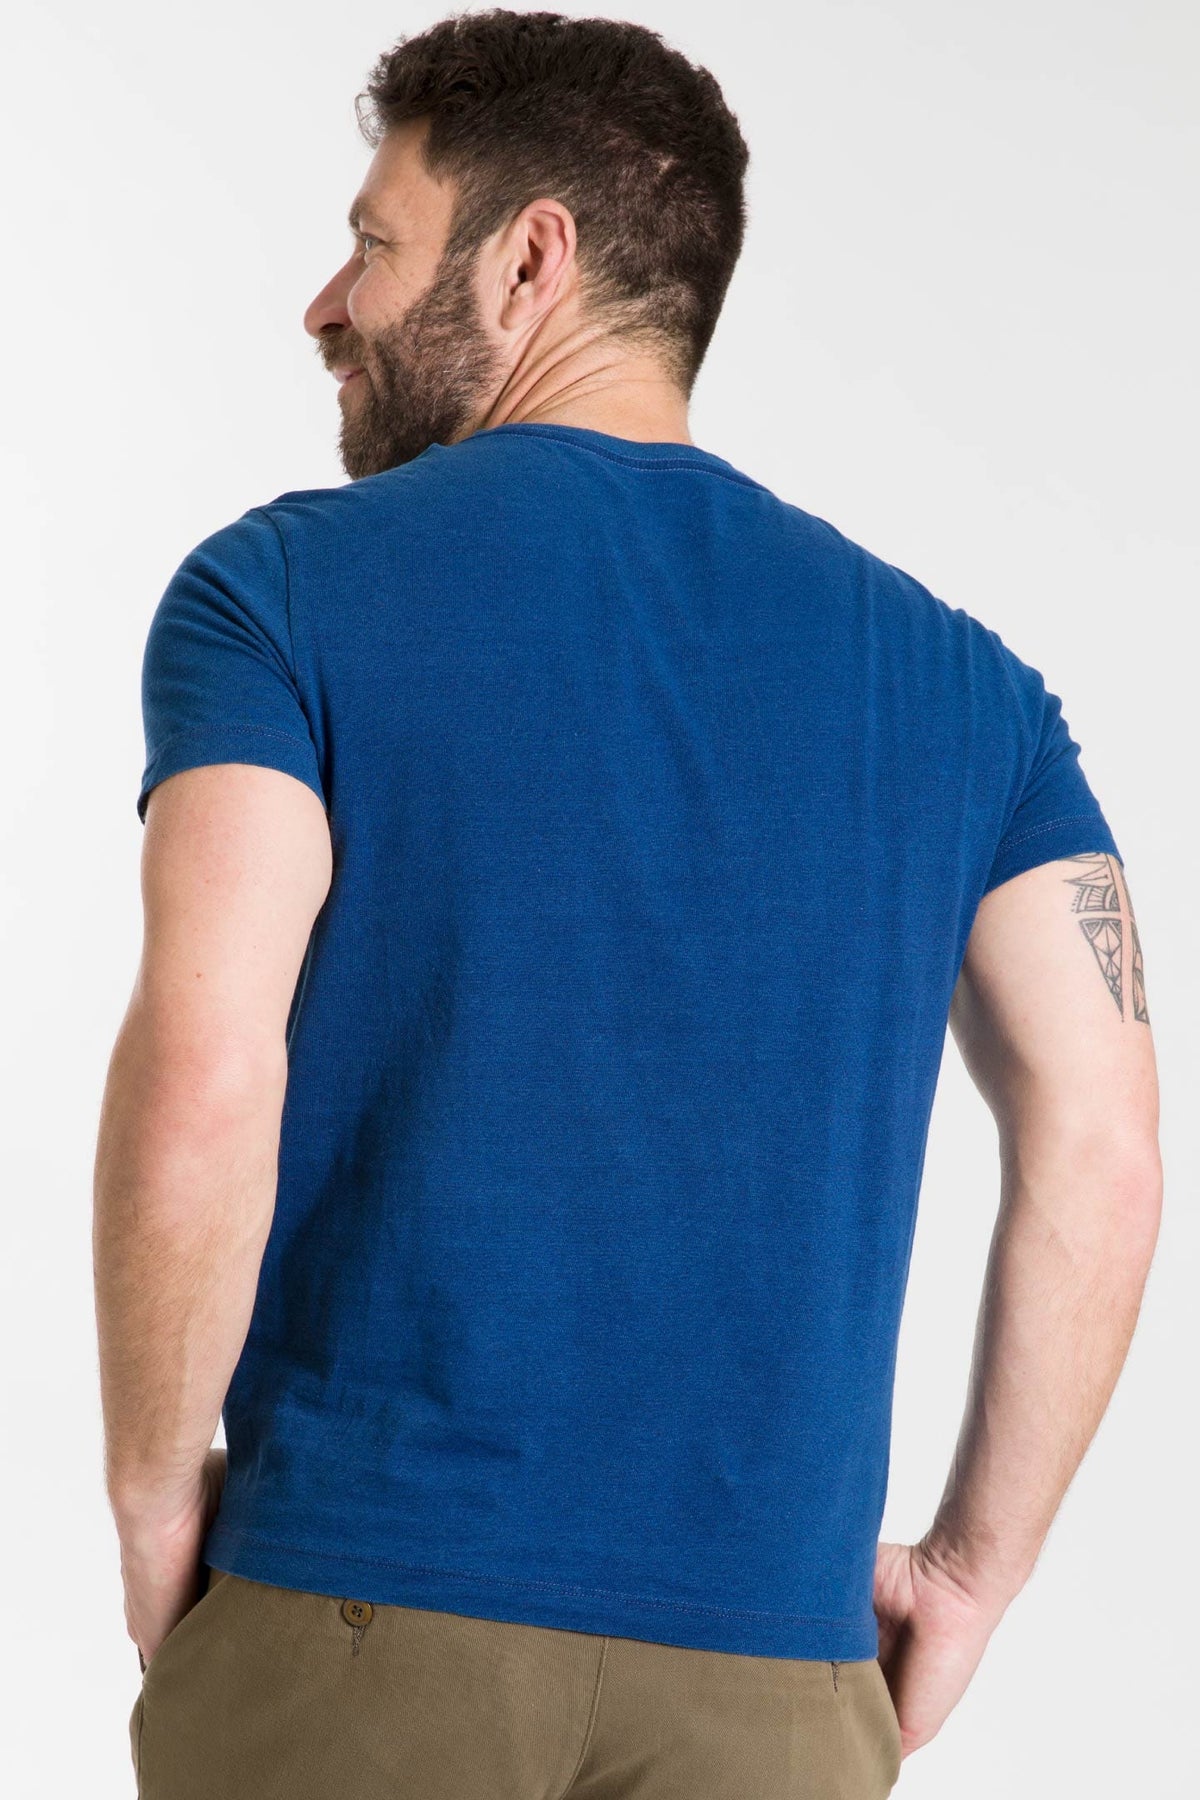 Ash & Erie Indigo Dyed Pima Cotton Crew Neck T-Shirt for Short Men